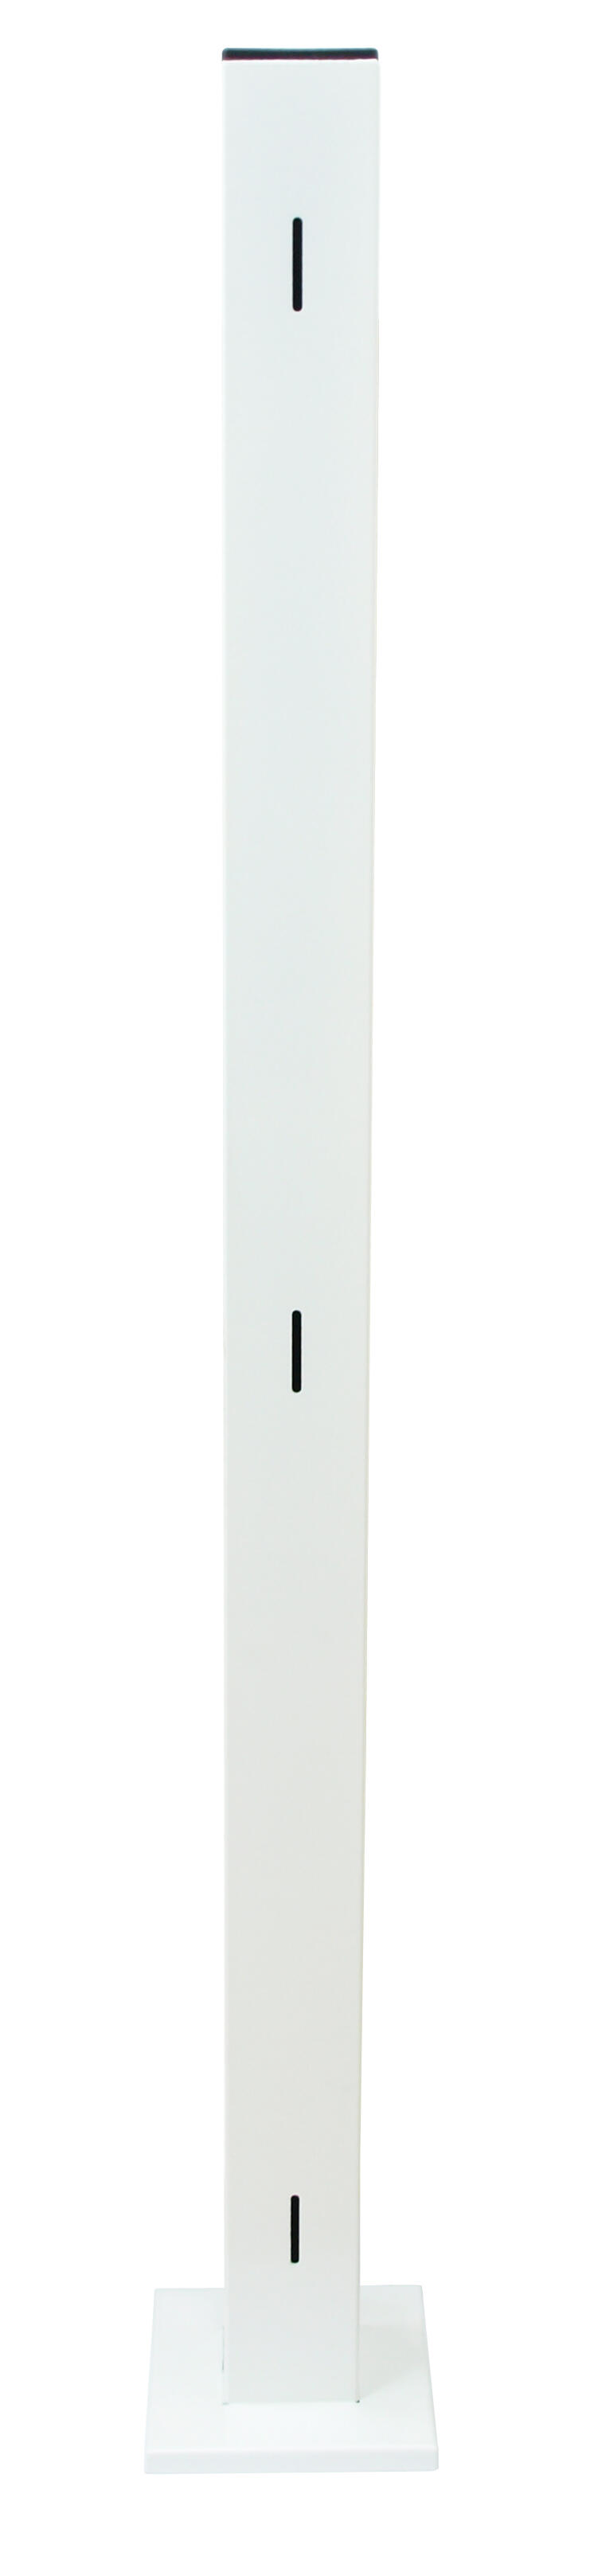 Poste de alineación acero galvanizado blanco 100x13 cm